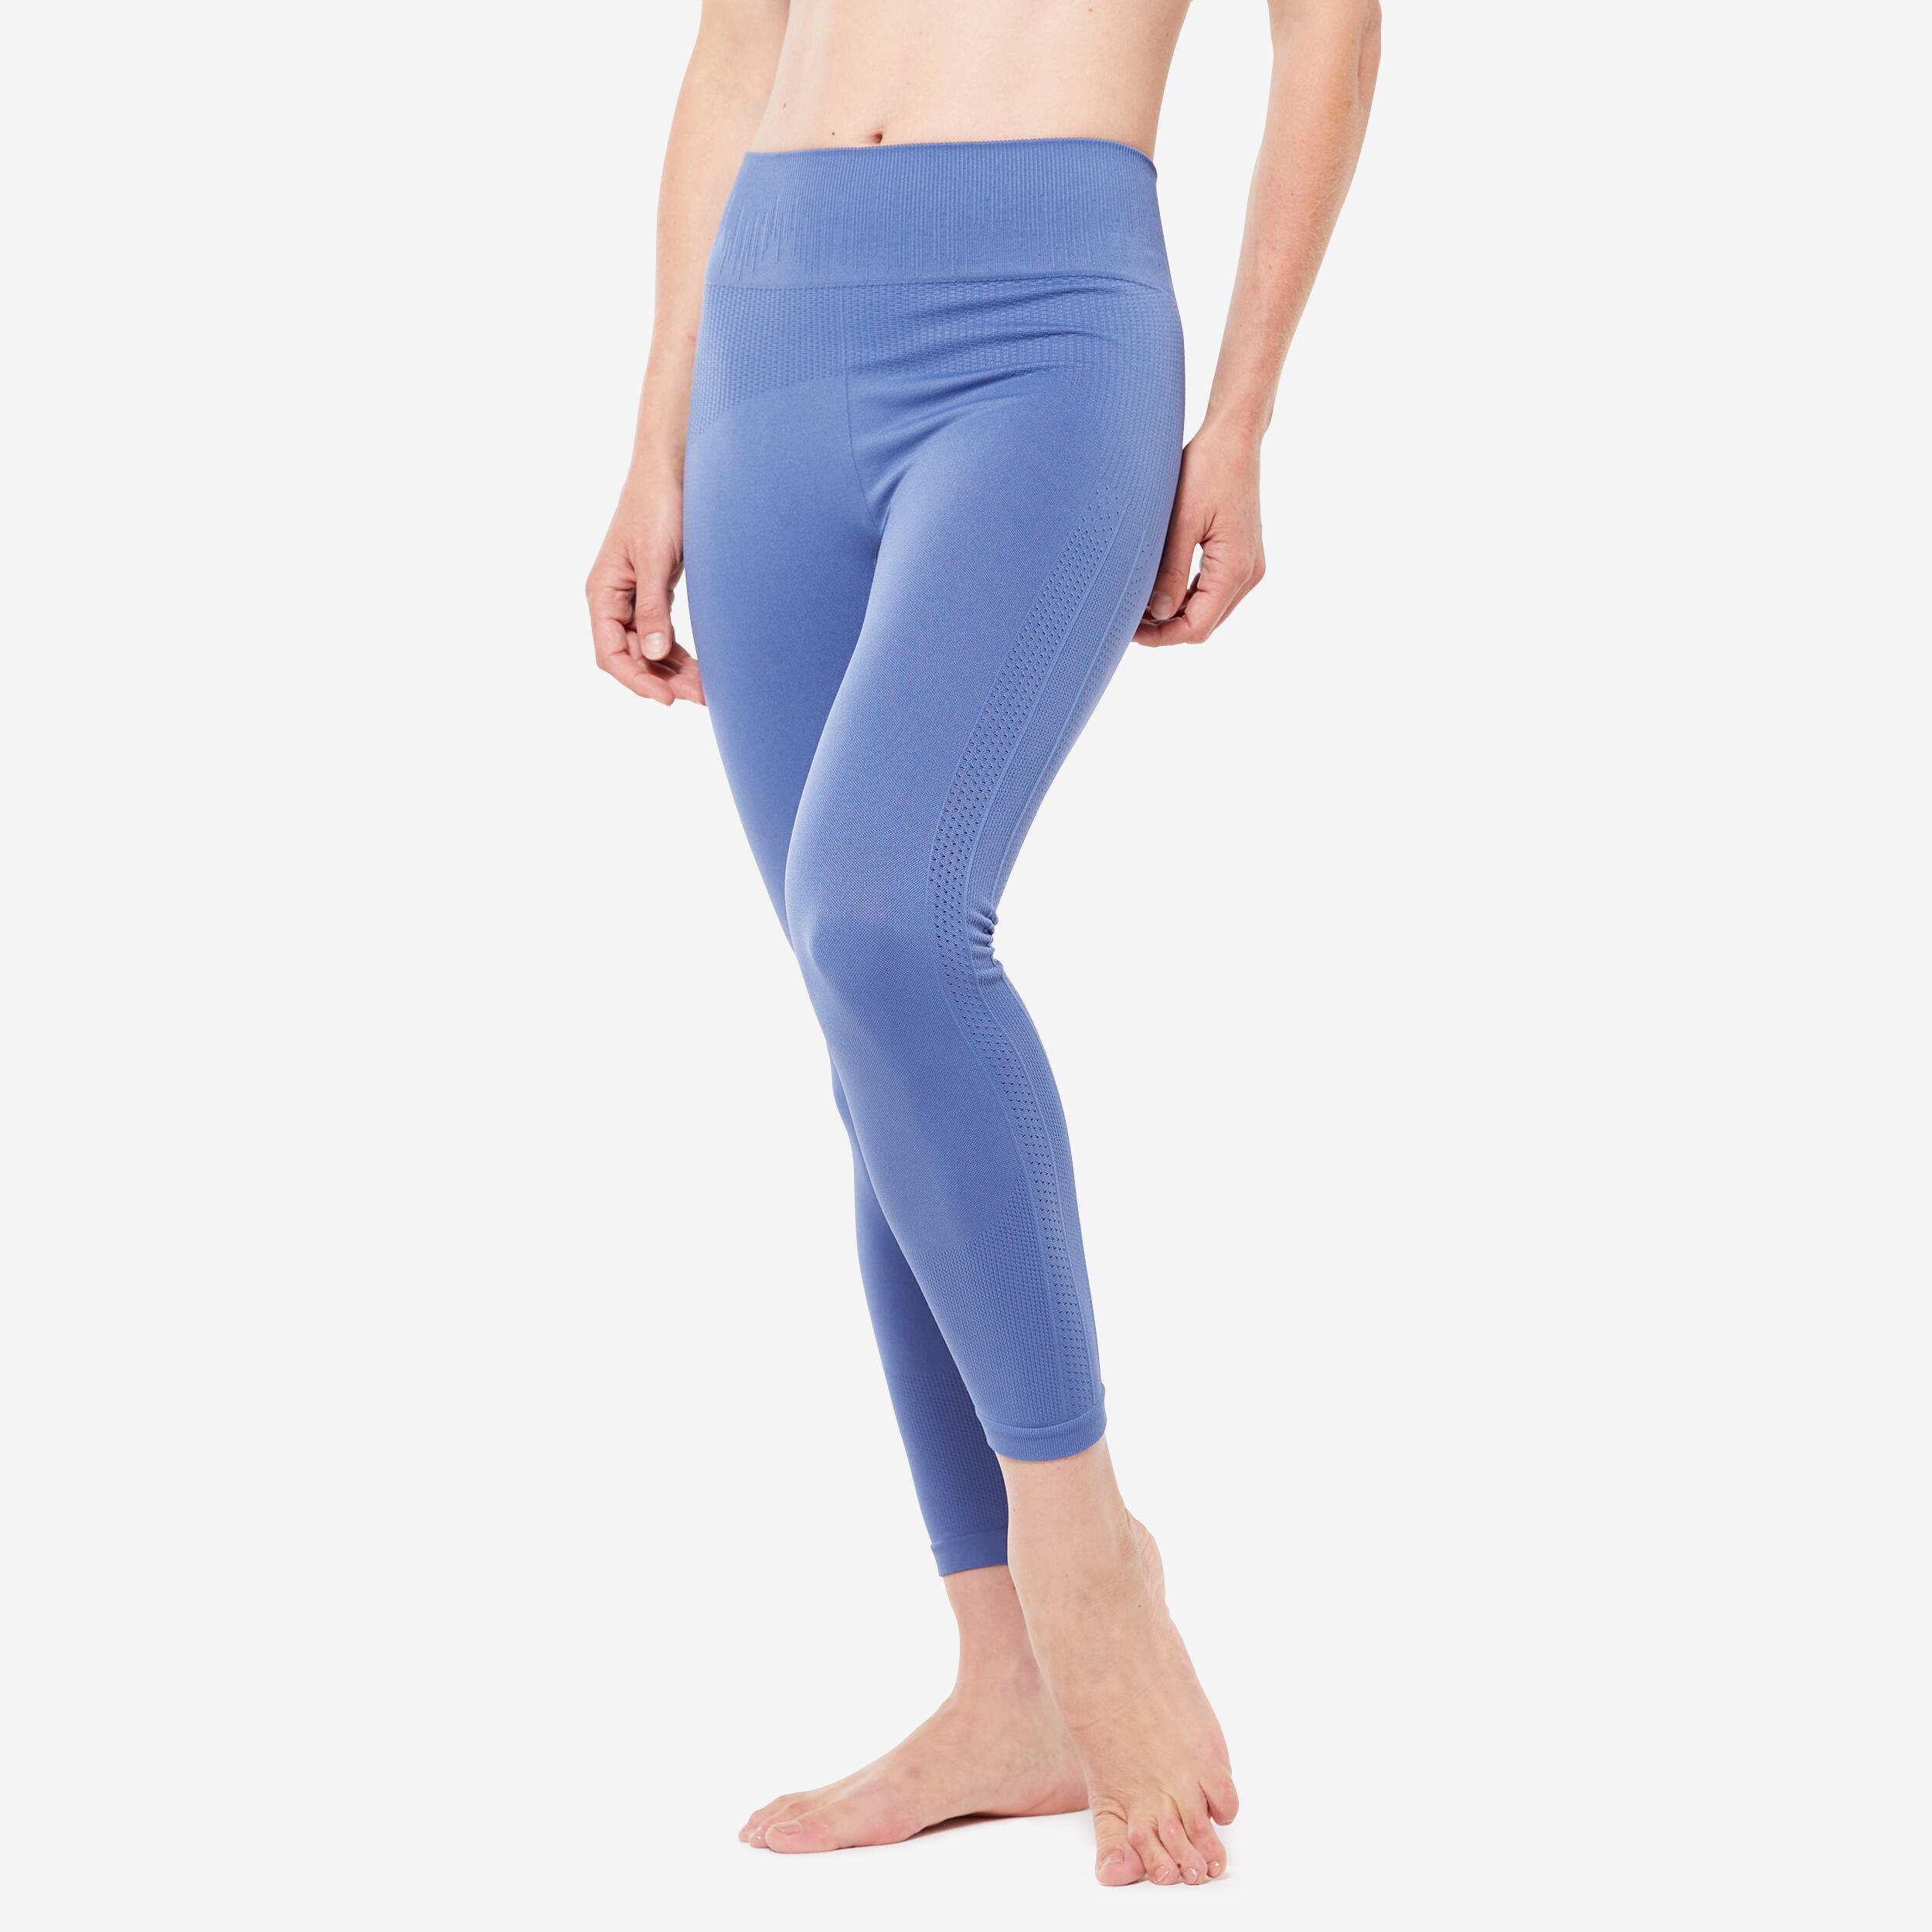 KIMJALY 7/8 Seamless Yoga Leggings Premium - Blue